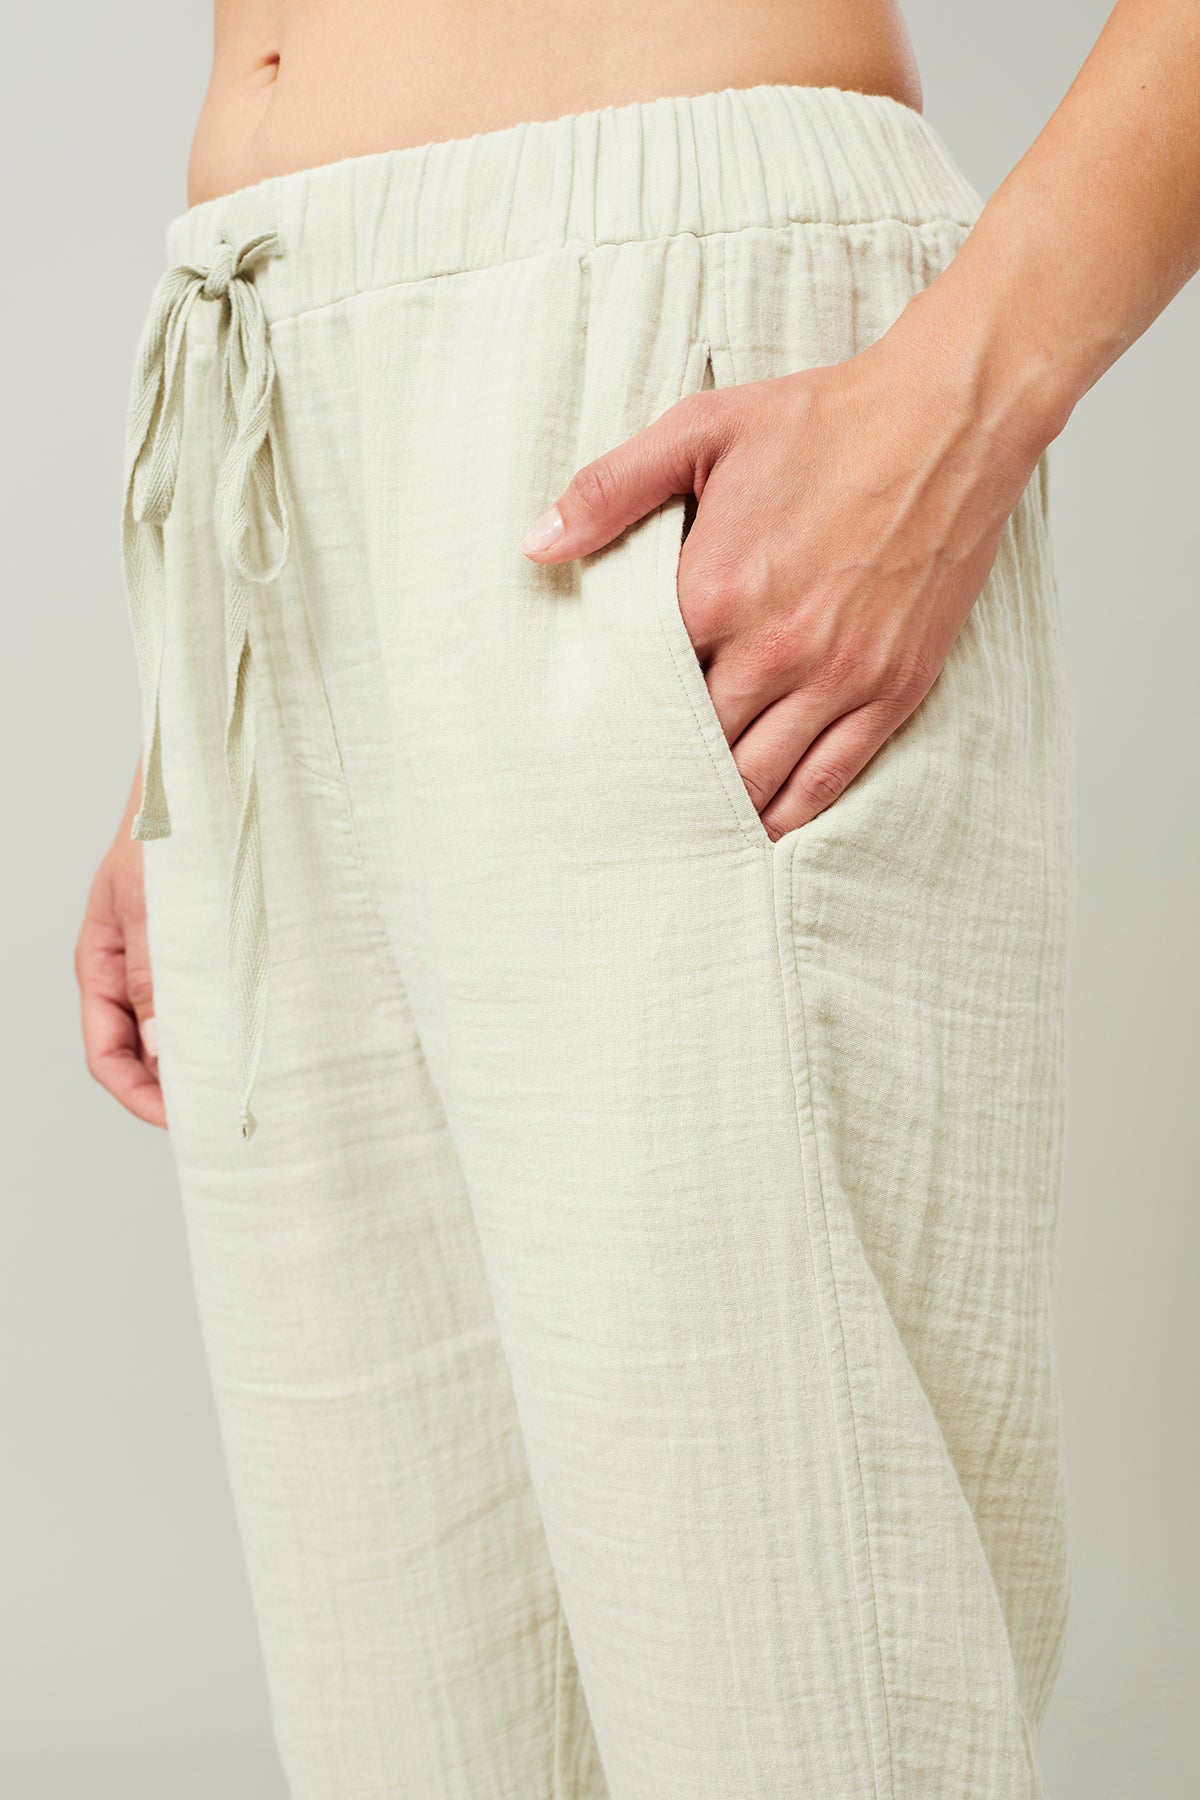 Mandala Yoga Pant Grün Detail - Track Pants